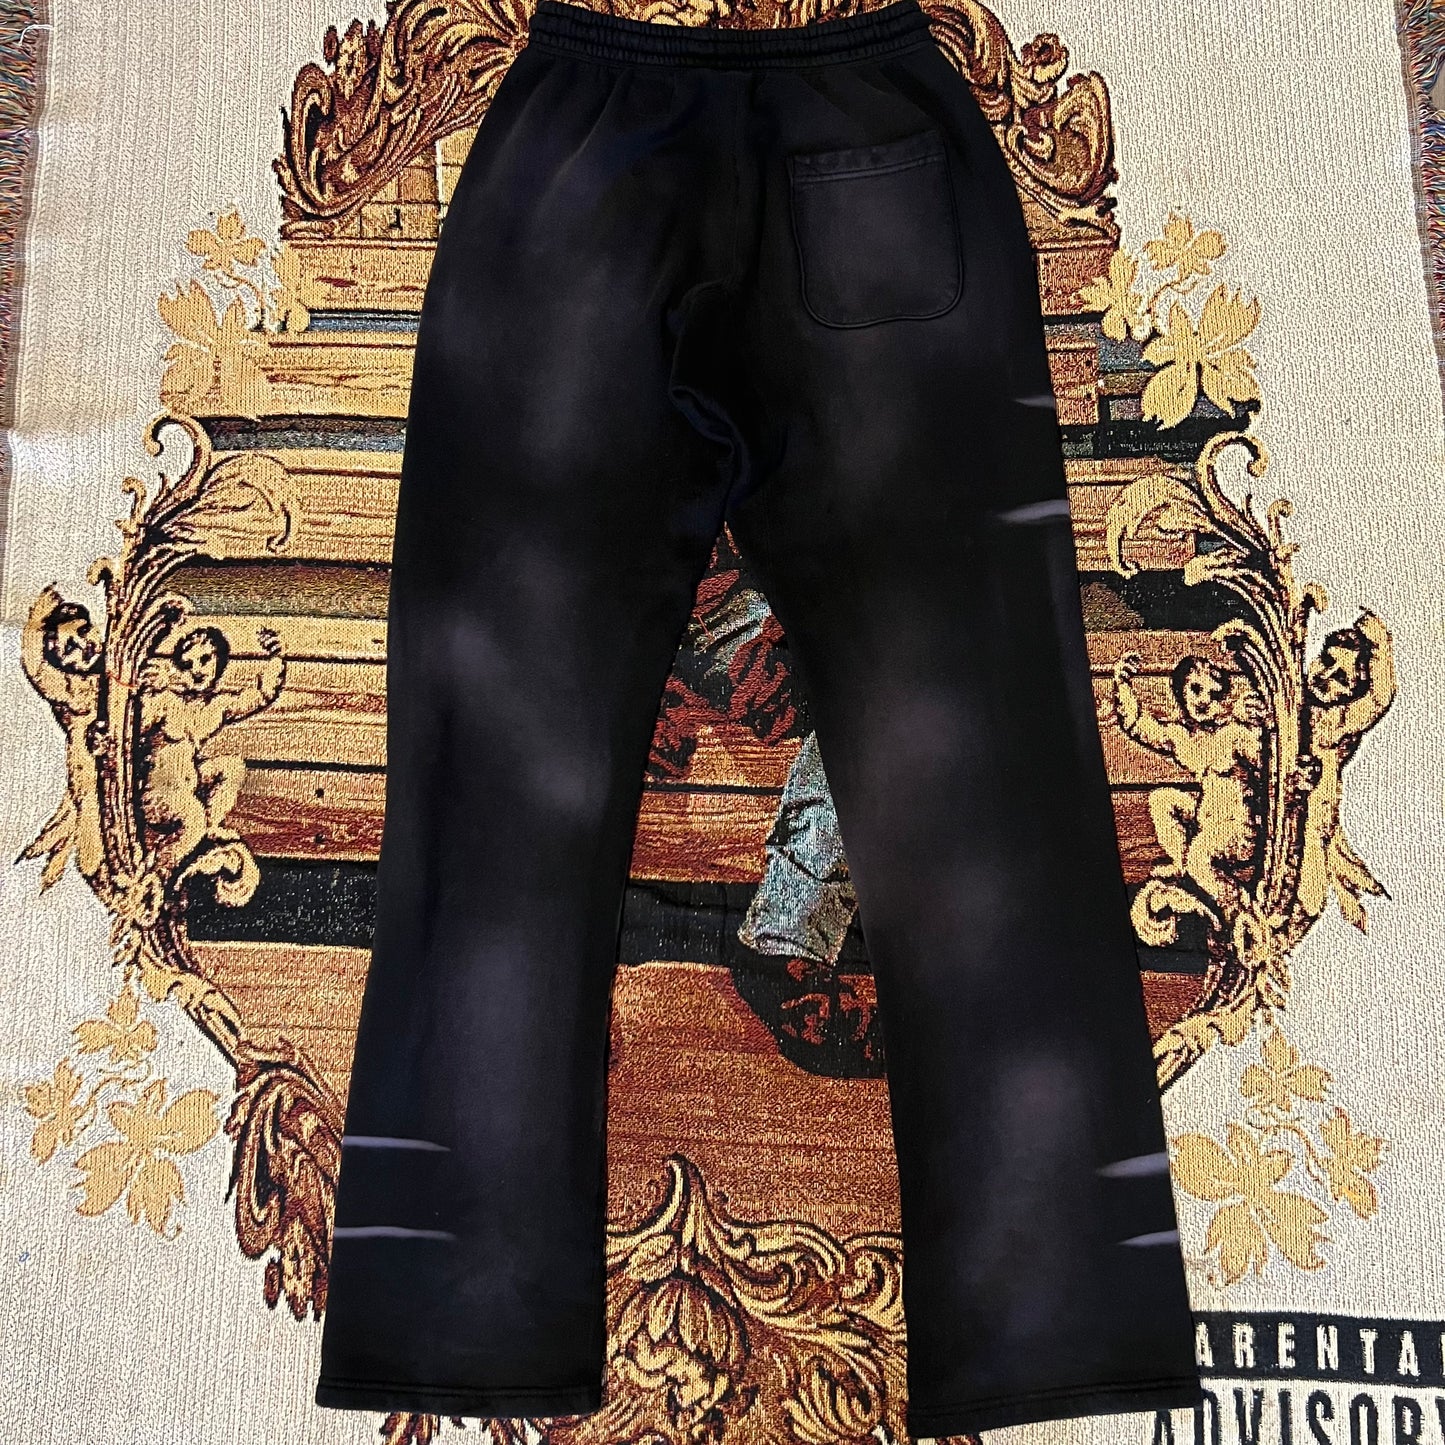 Hellstar Airbrushed Skull Flare Bottom Sweatpants Midnight Dye Black - Preowned